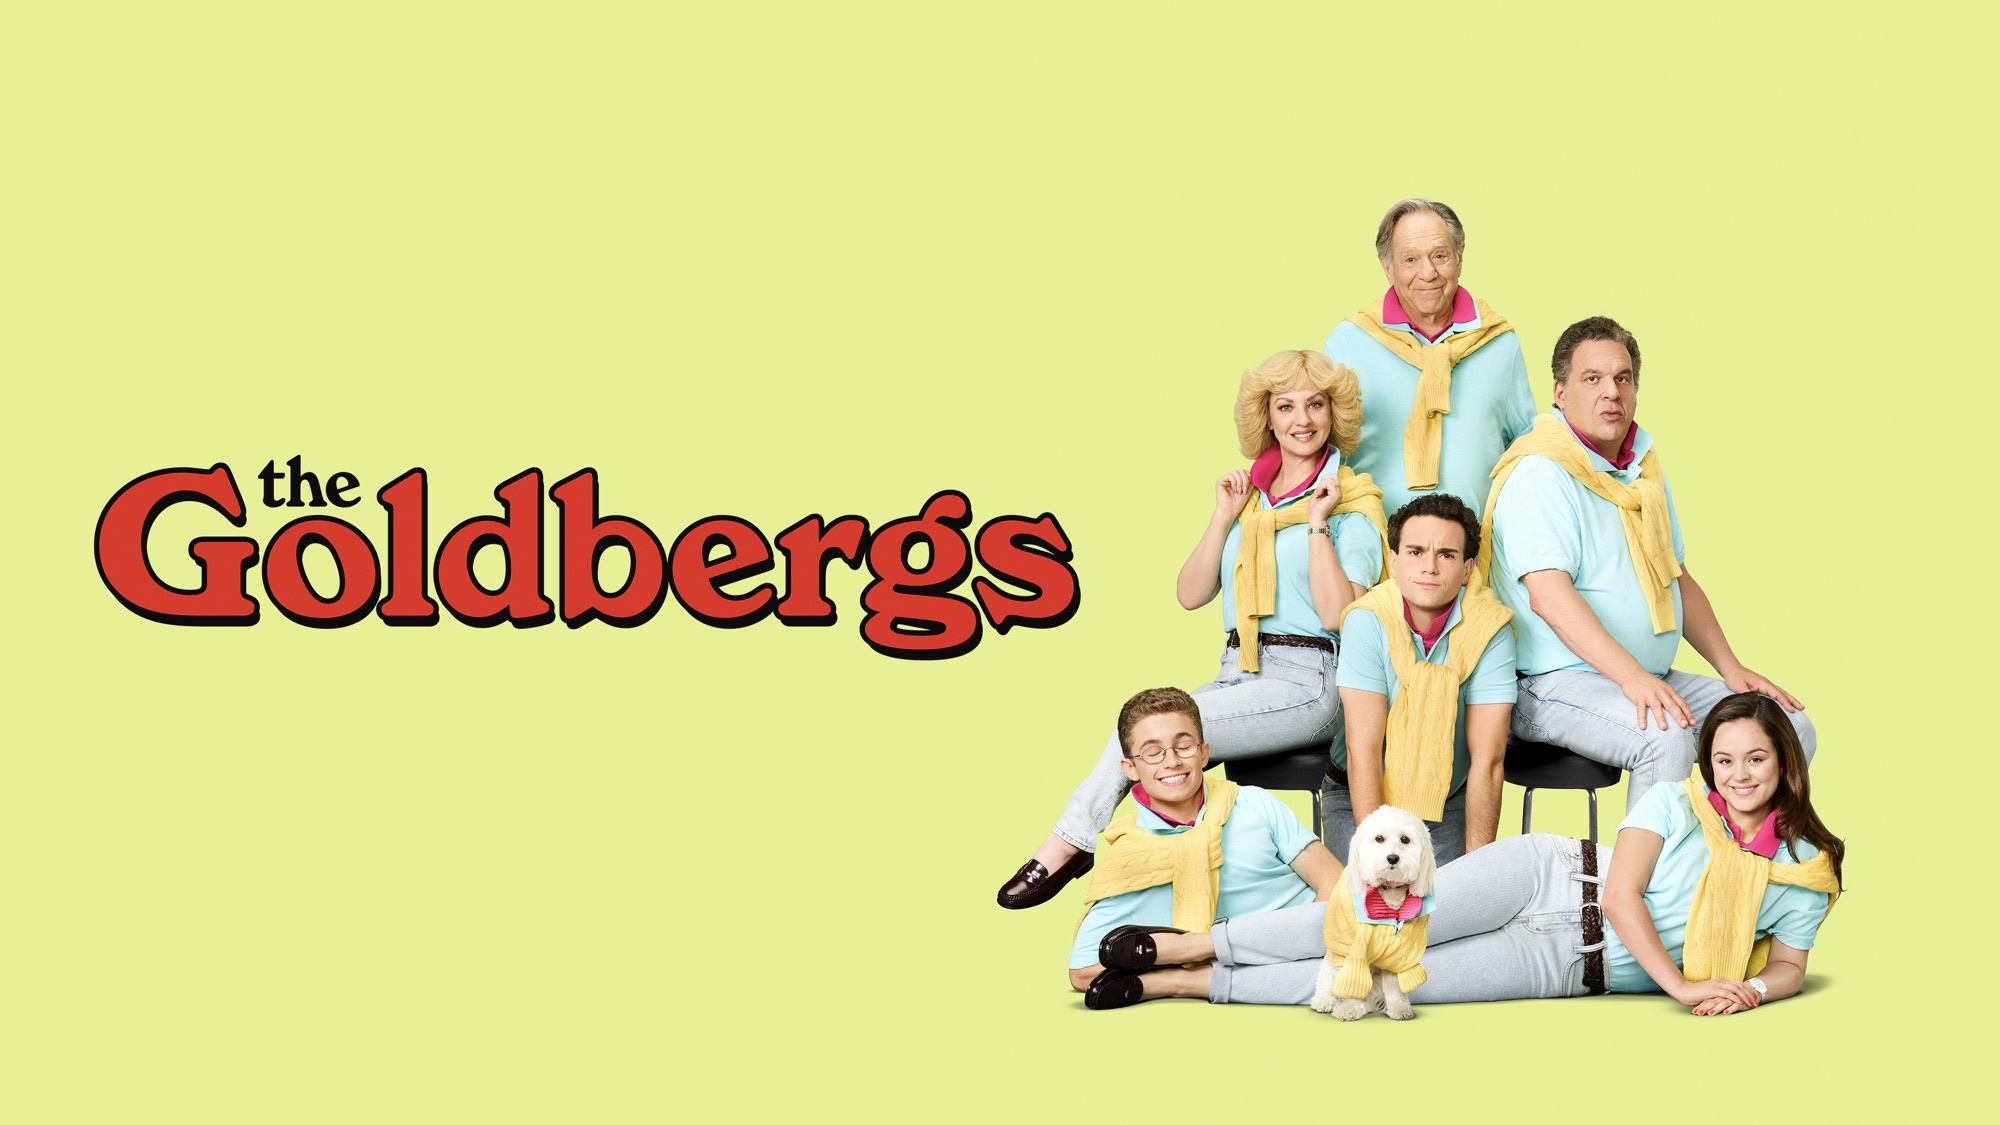 The Goldbergs TV Series, The Goldbergs HD wallpapers, 2000x1130 HD Desktop